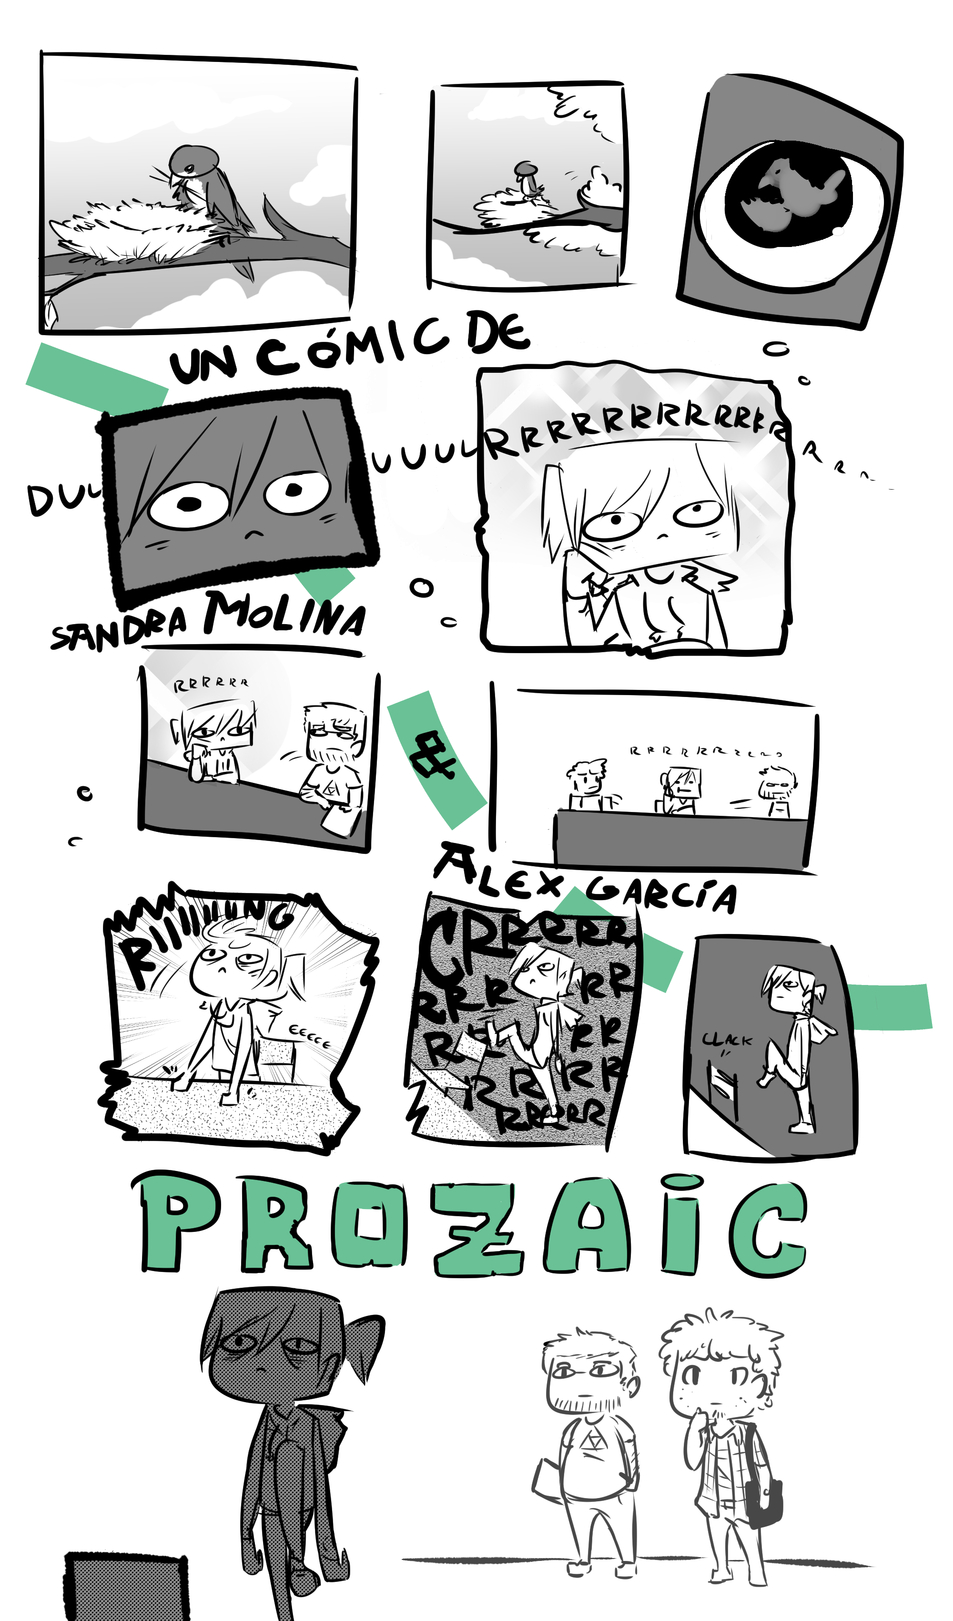 ¡Bienvenidos a Prozaic!